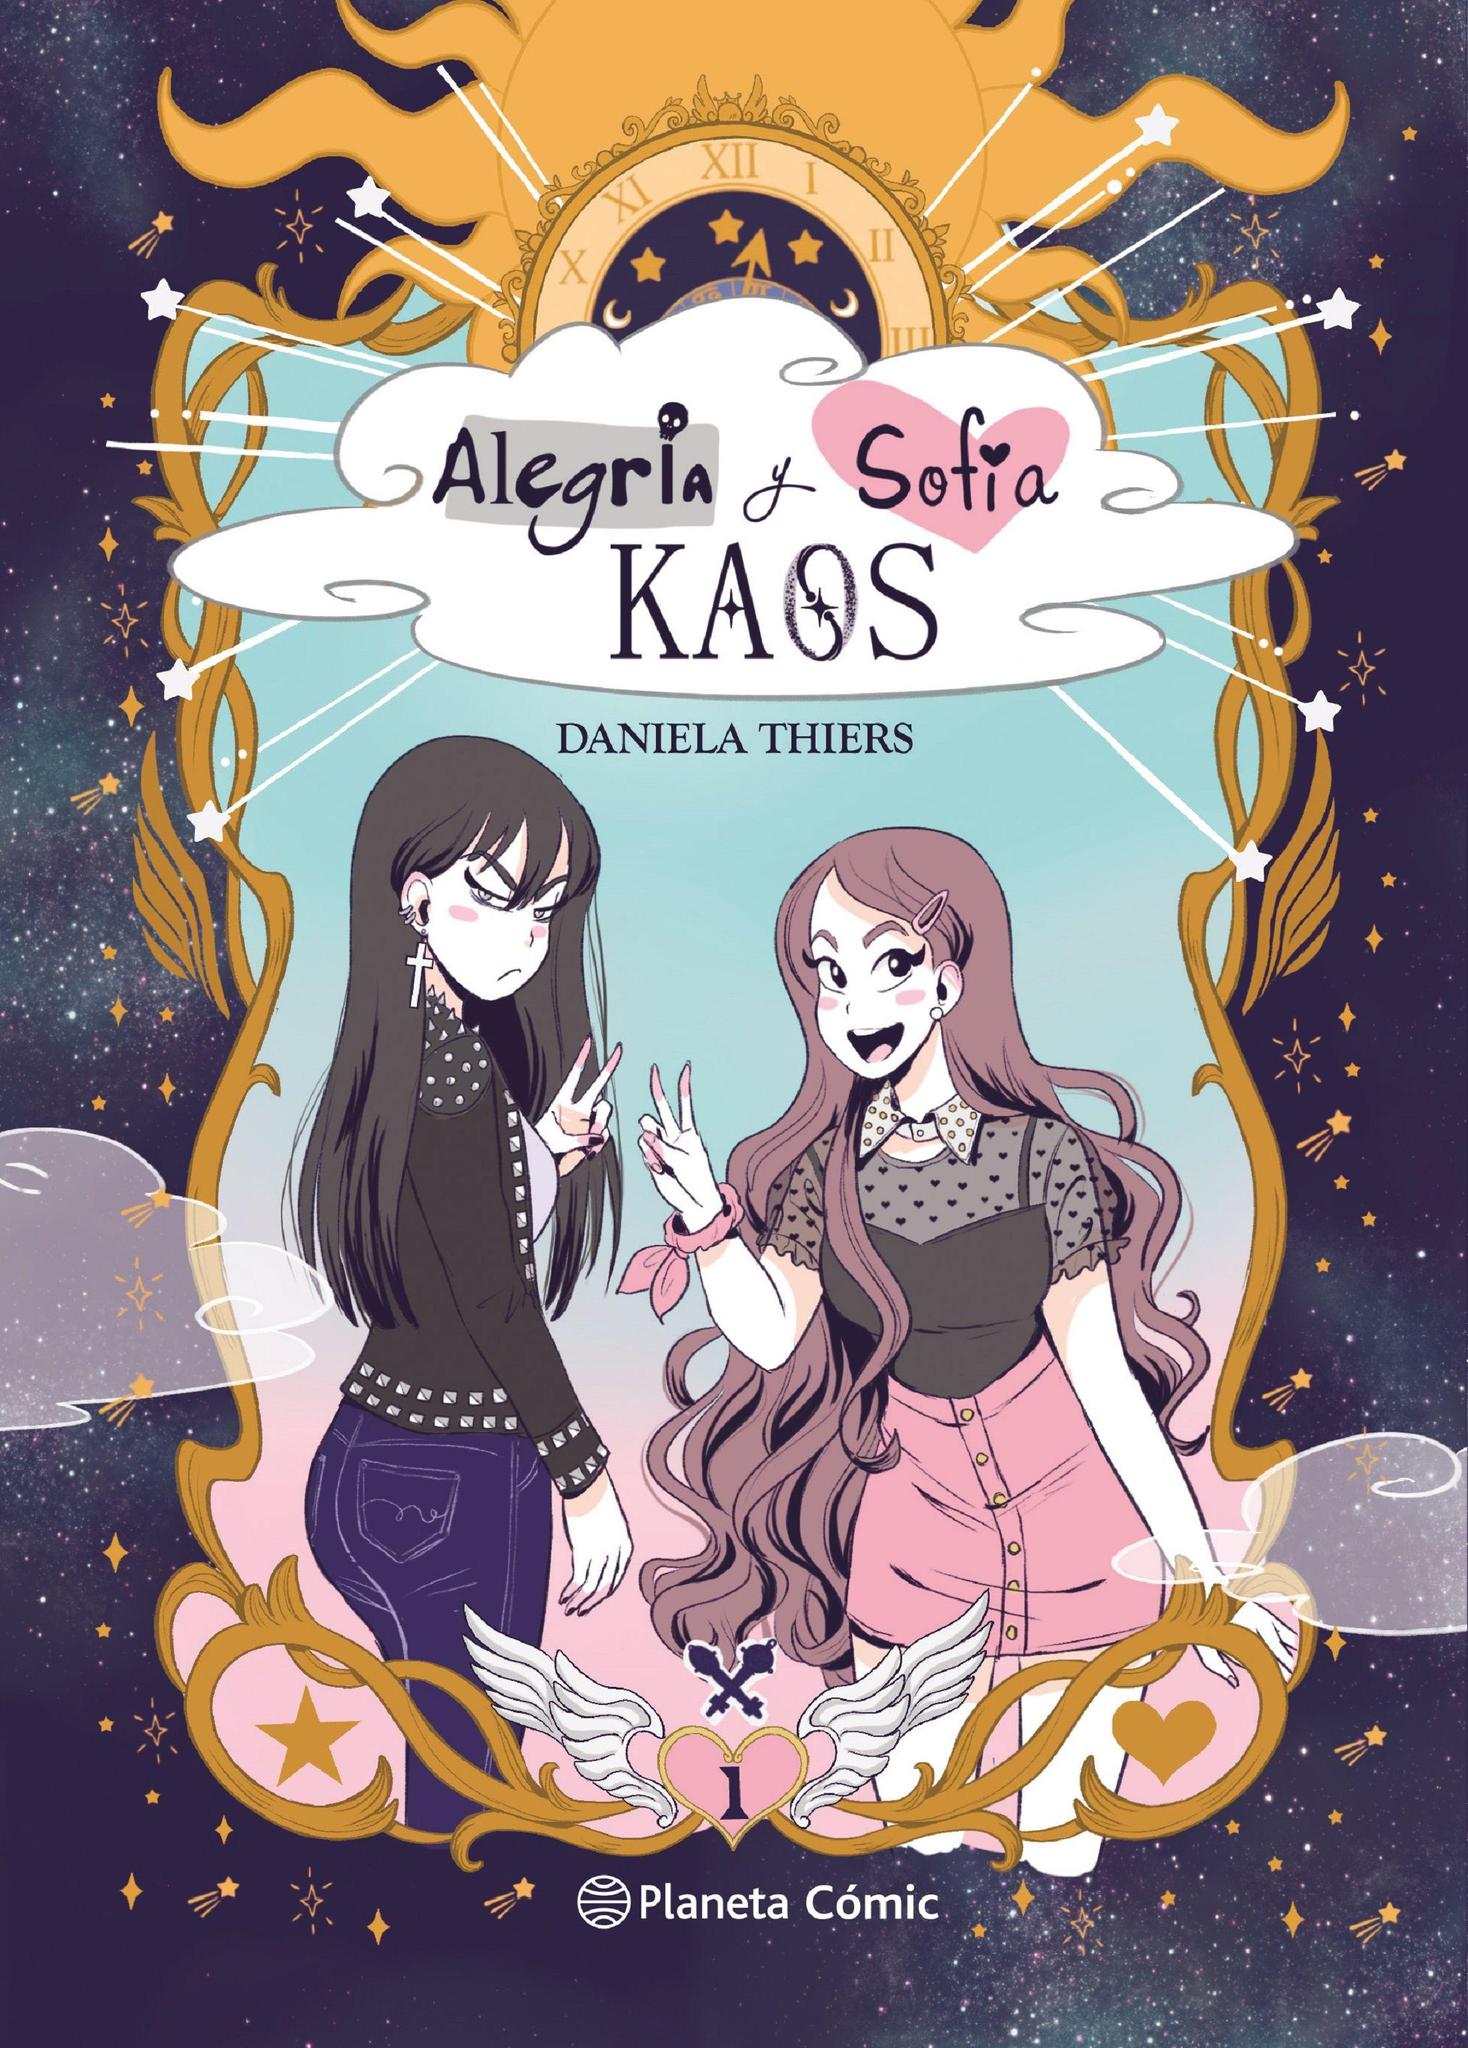 Alegria y Sofia Kaos - Daniela Thiers